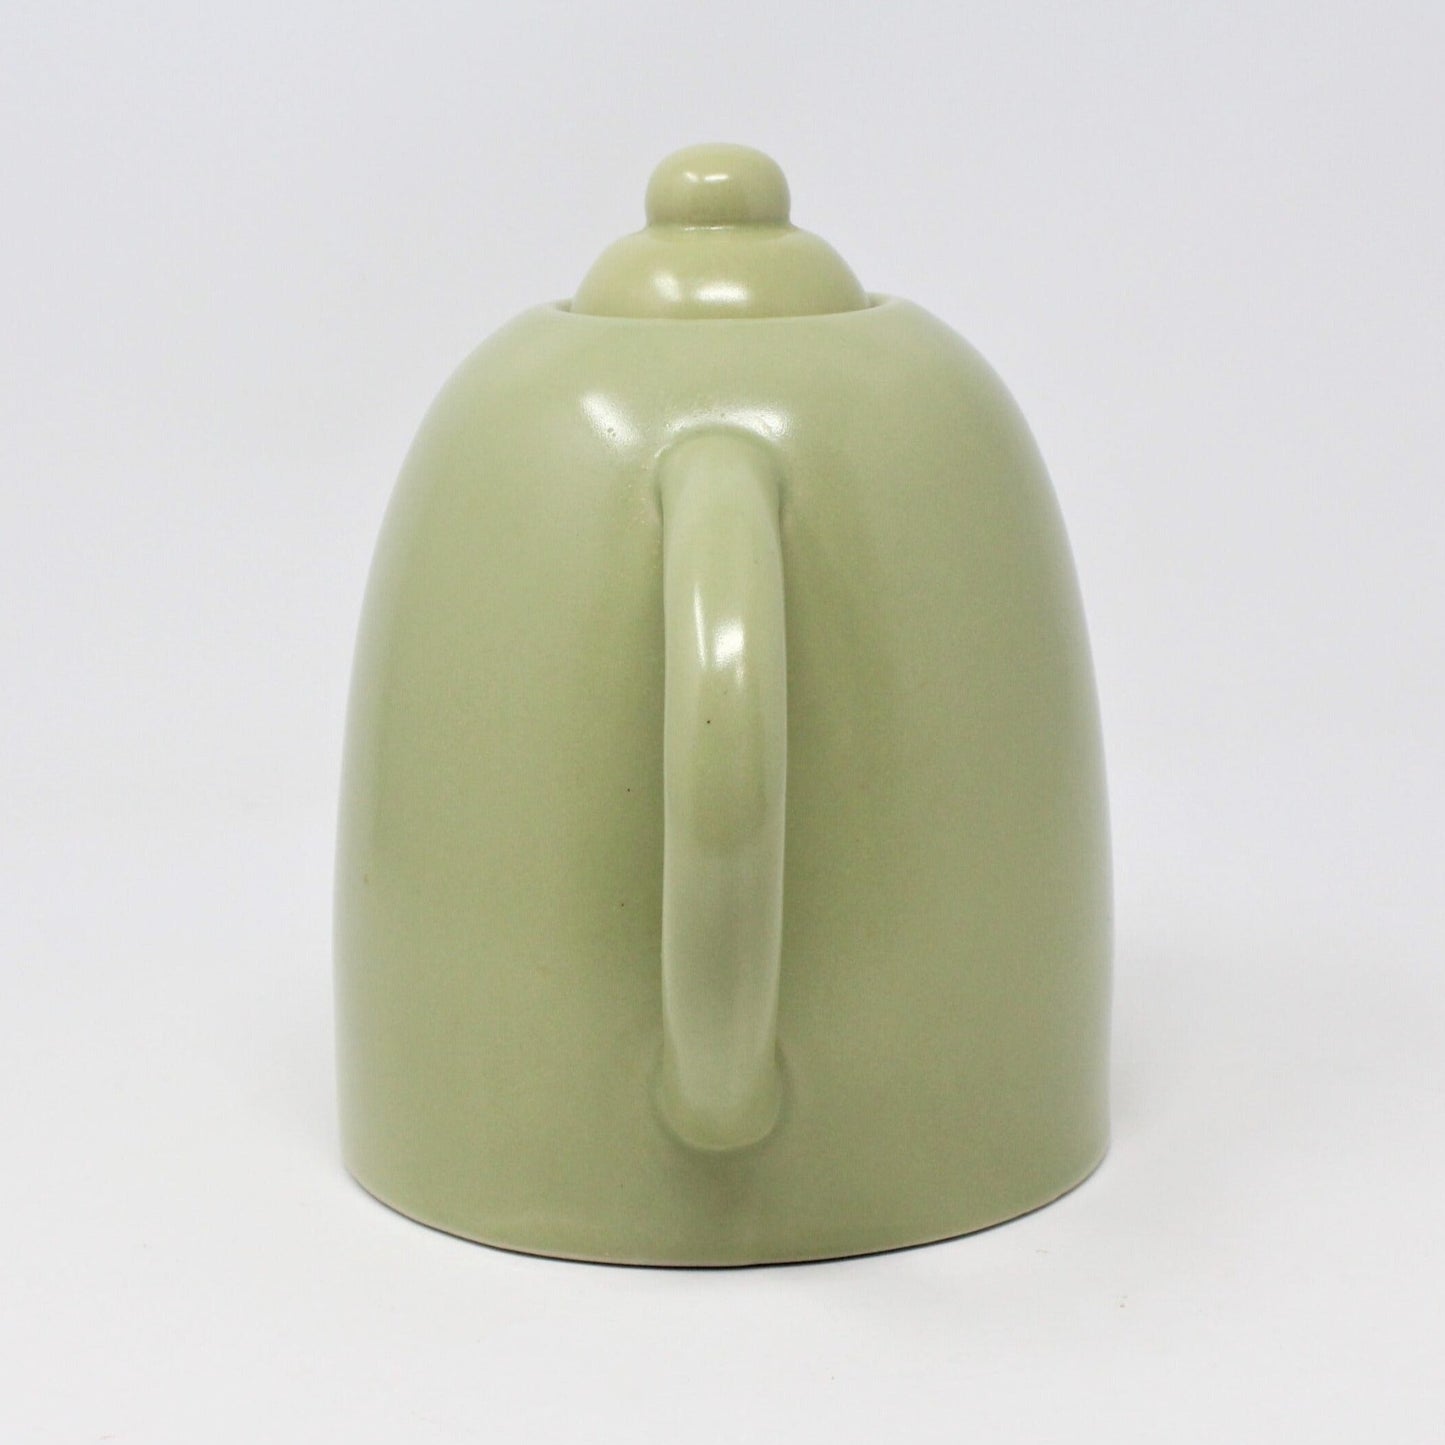 Teapot, MSRF Inc Design Studio, Avocado Green, Starbucks 2012